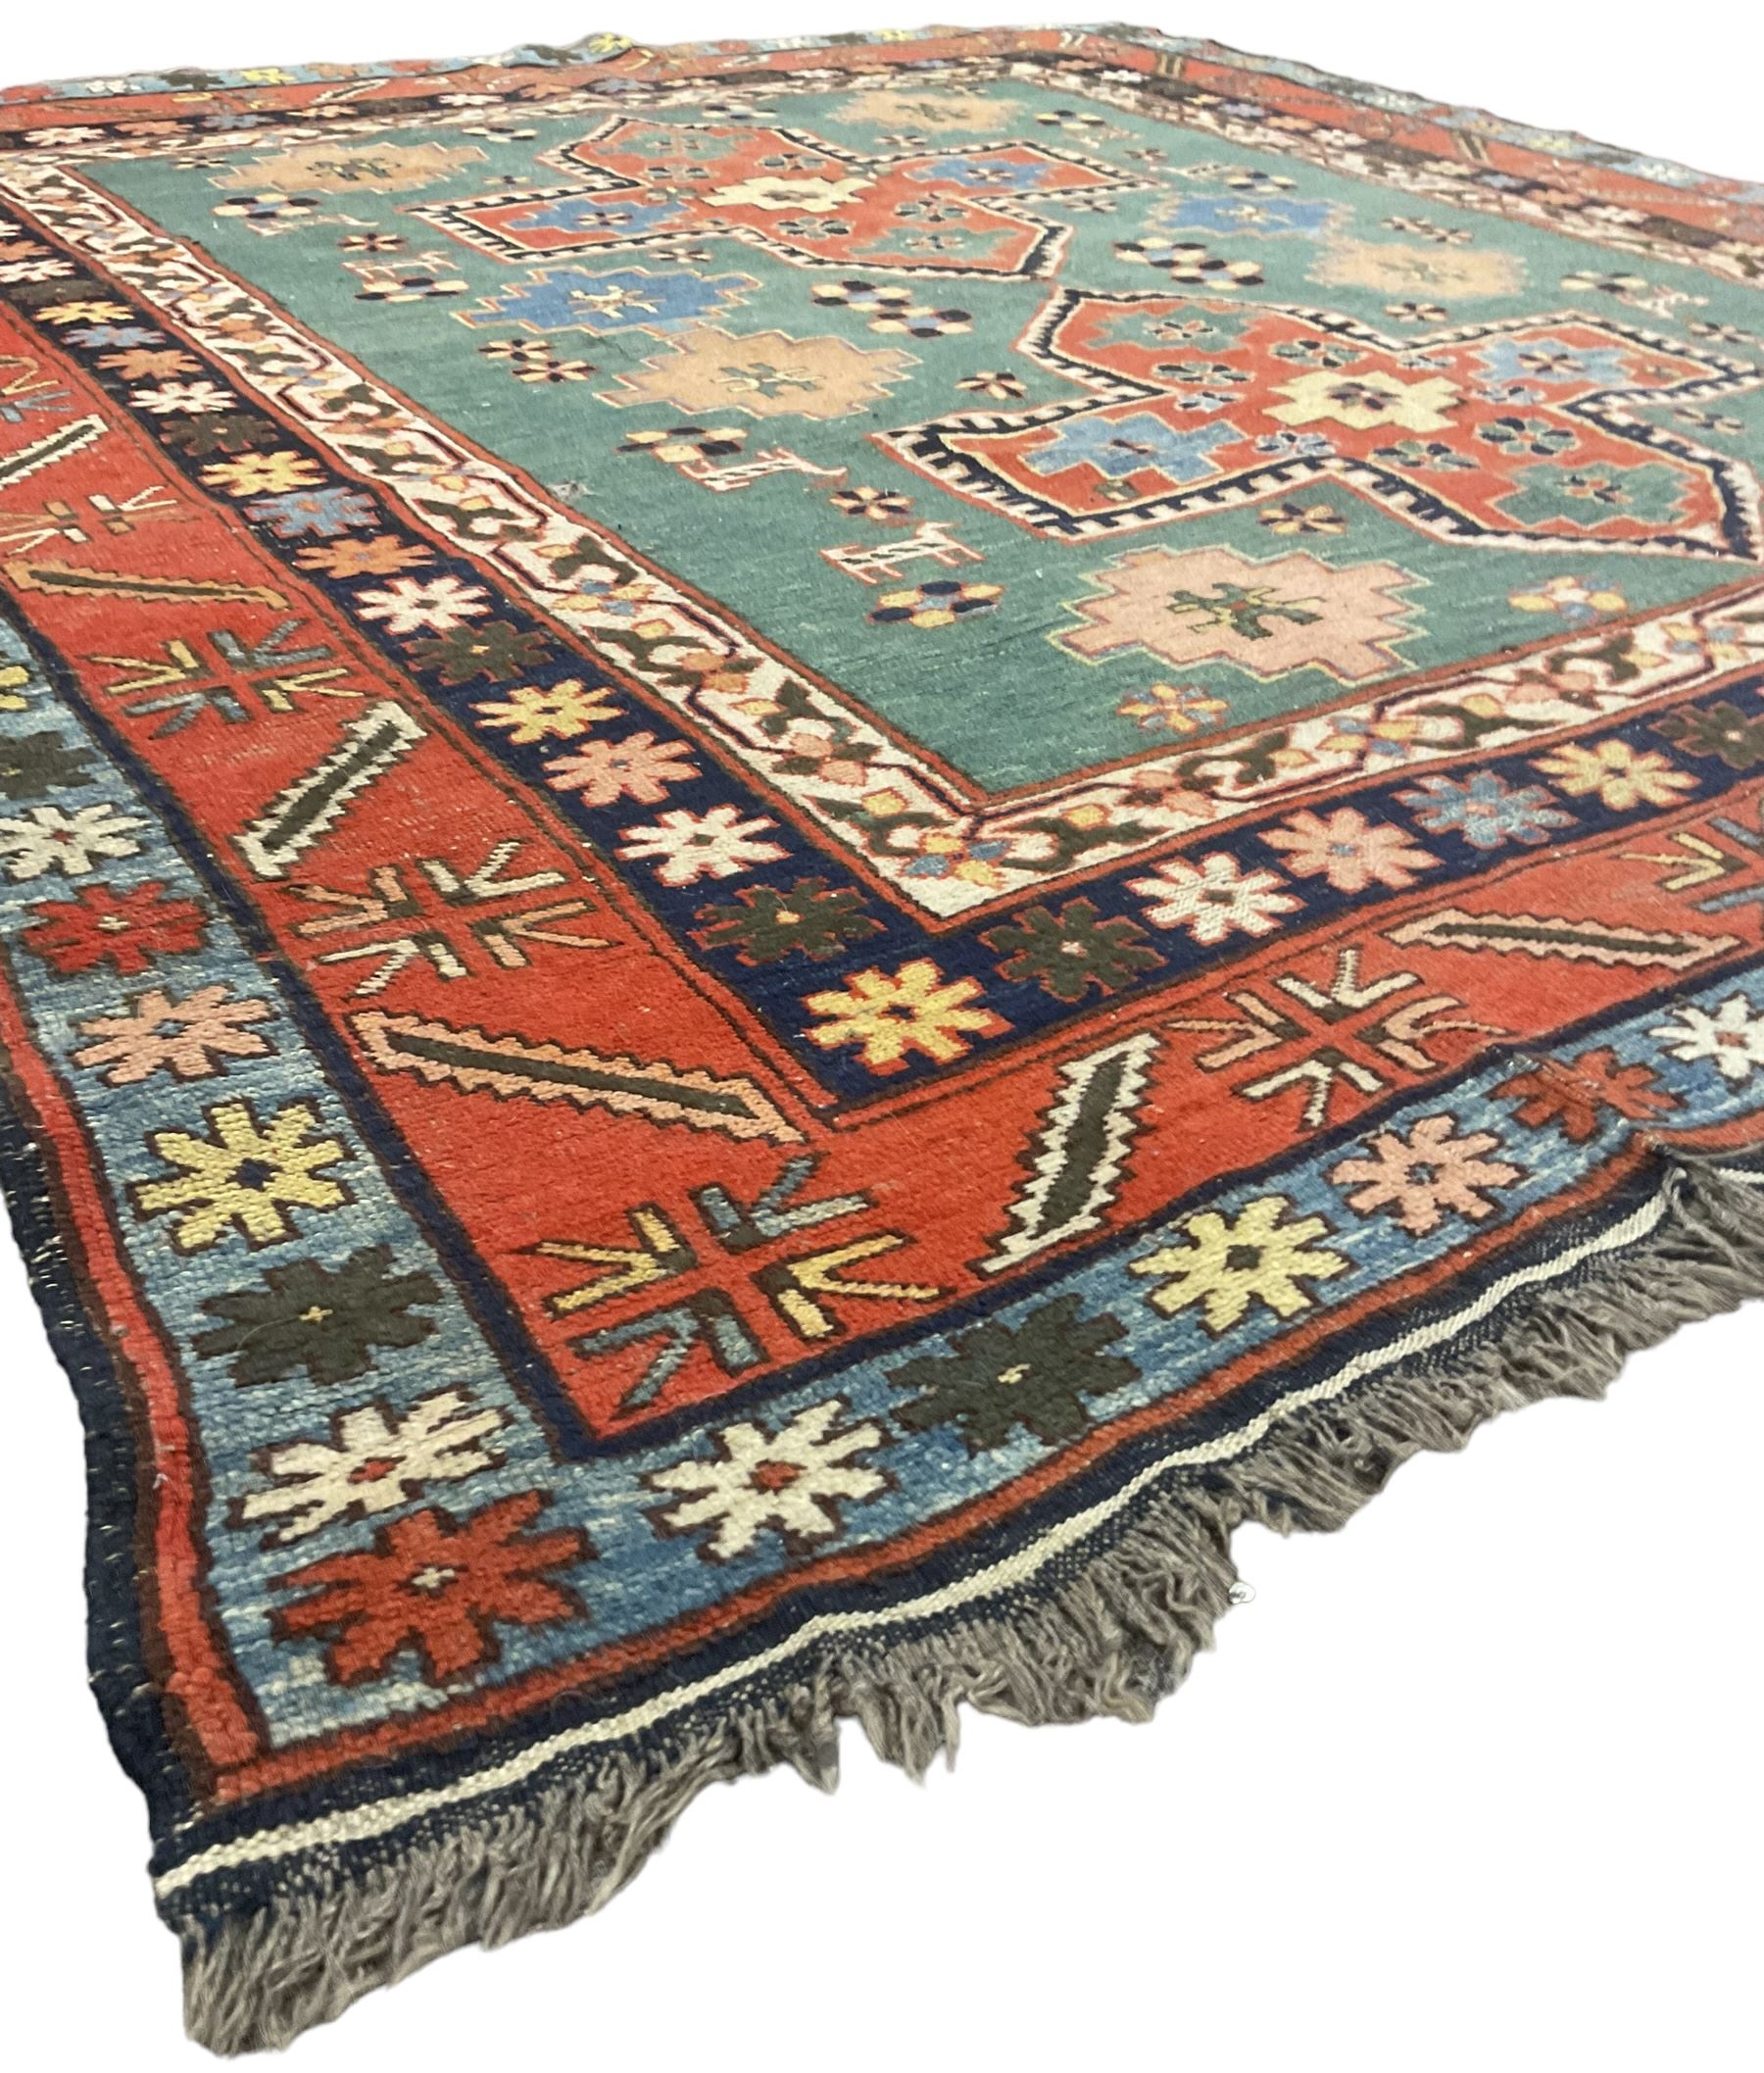 Caucasian turquoise ground rug - Image 4 of 6